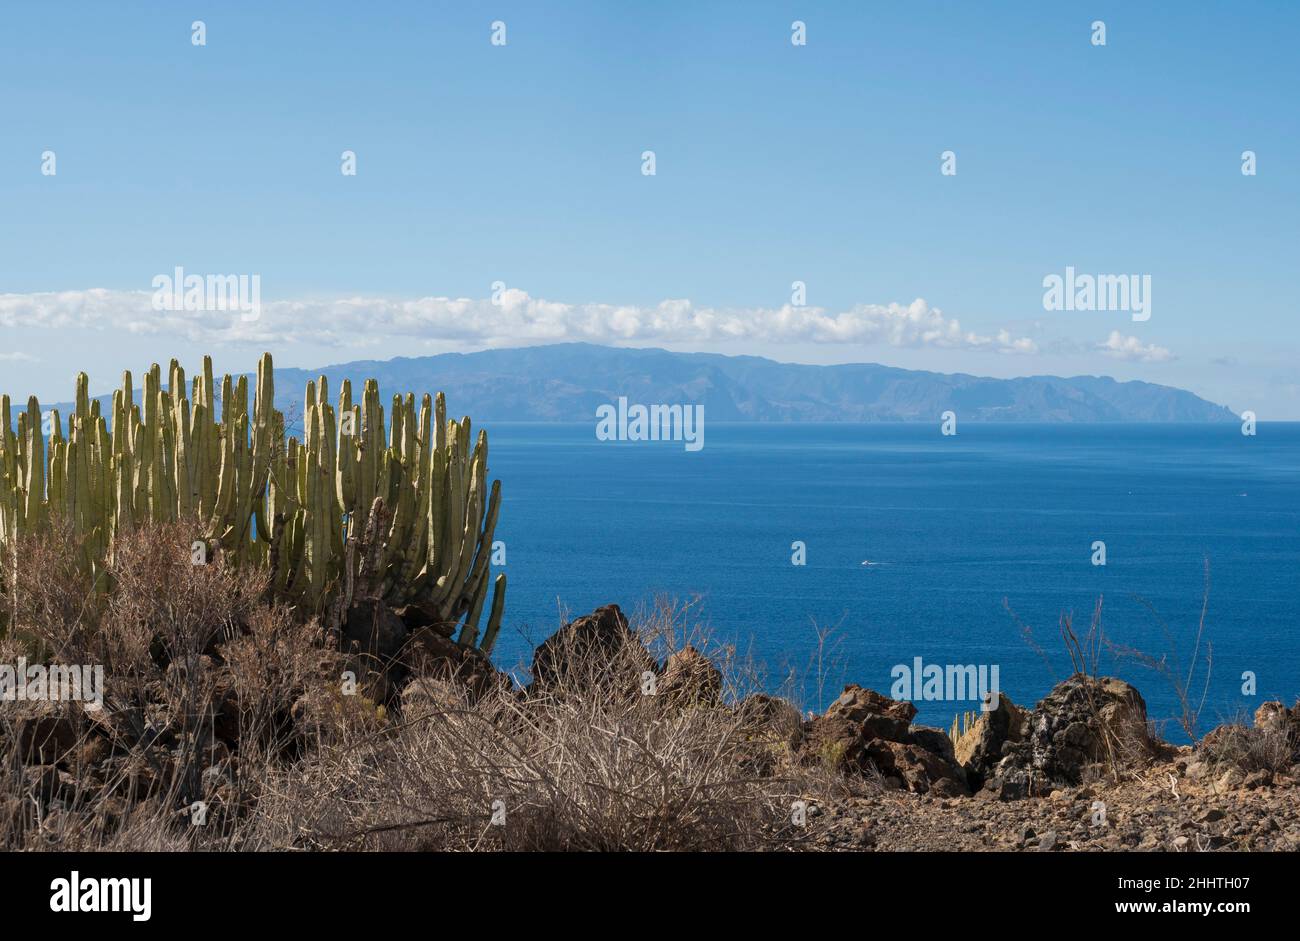 Volcanic outcrop near Archipenque, Los Gigantes, Tenerife. View over Puerto Santiago to La Gomera, with cacti. Stock Photo